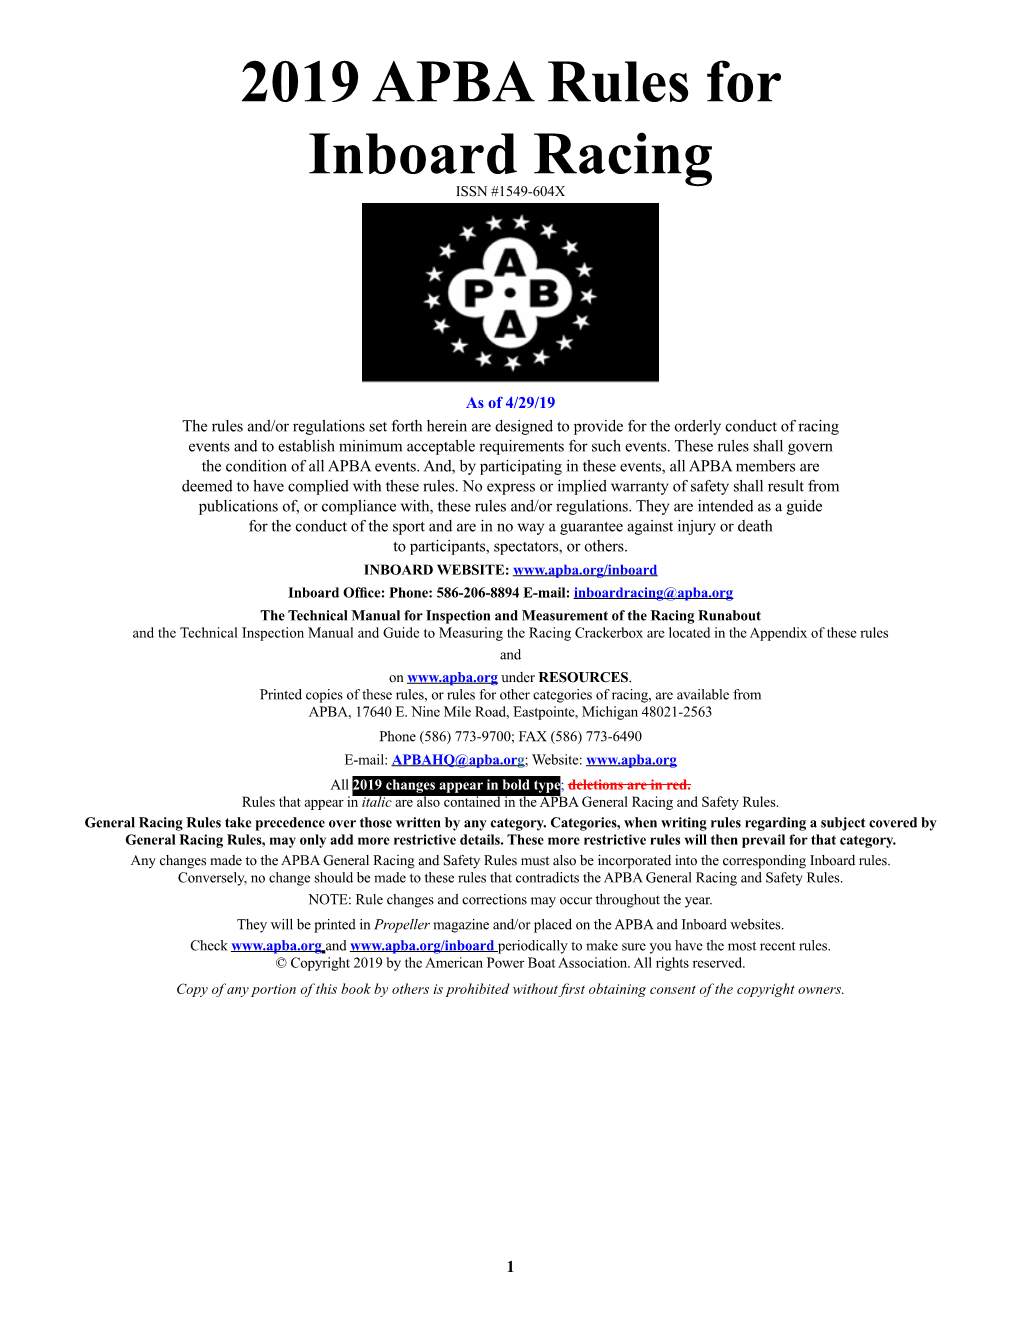 2019 APBA Rules for Inboard Racing ISSN #1549-604X